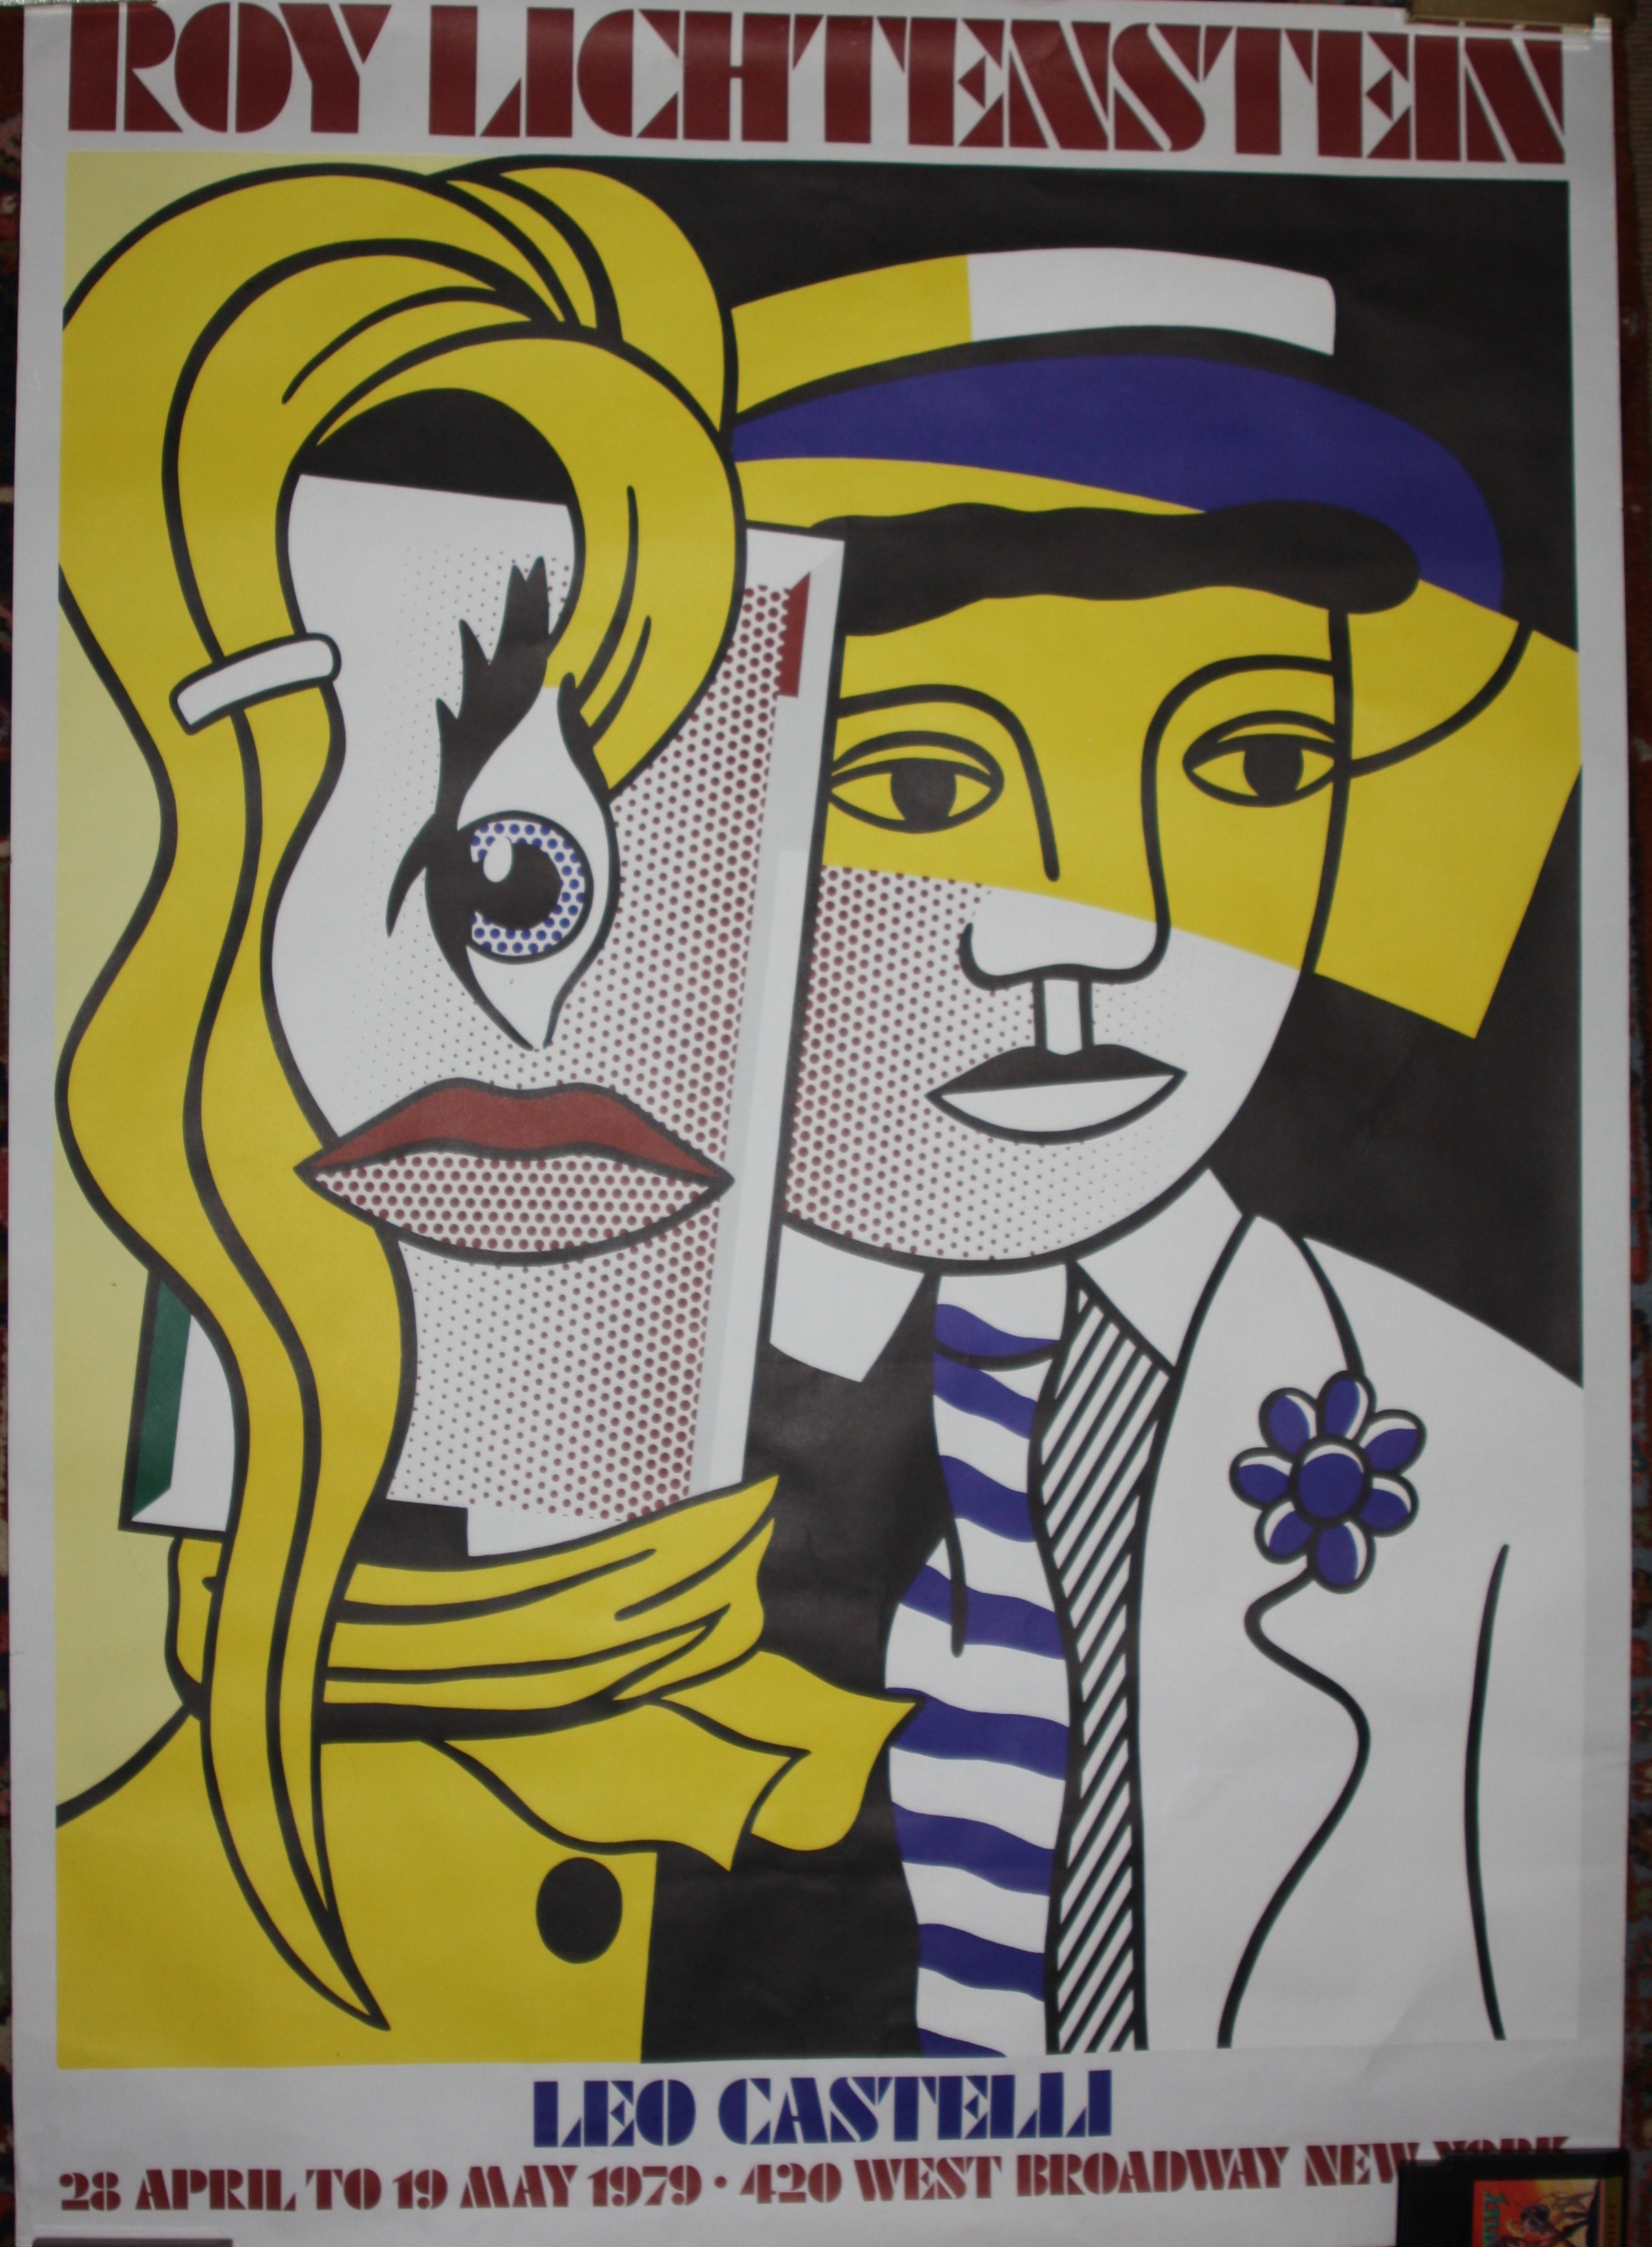 An Original Roy Lichtenstein Poster with signed transport roll